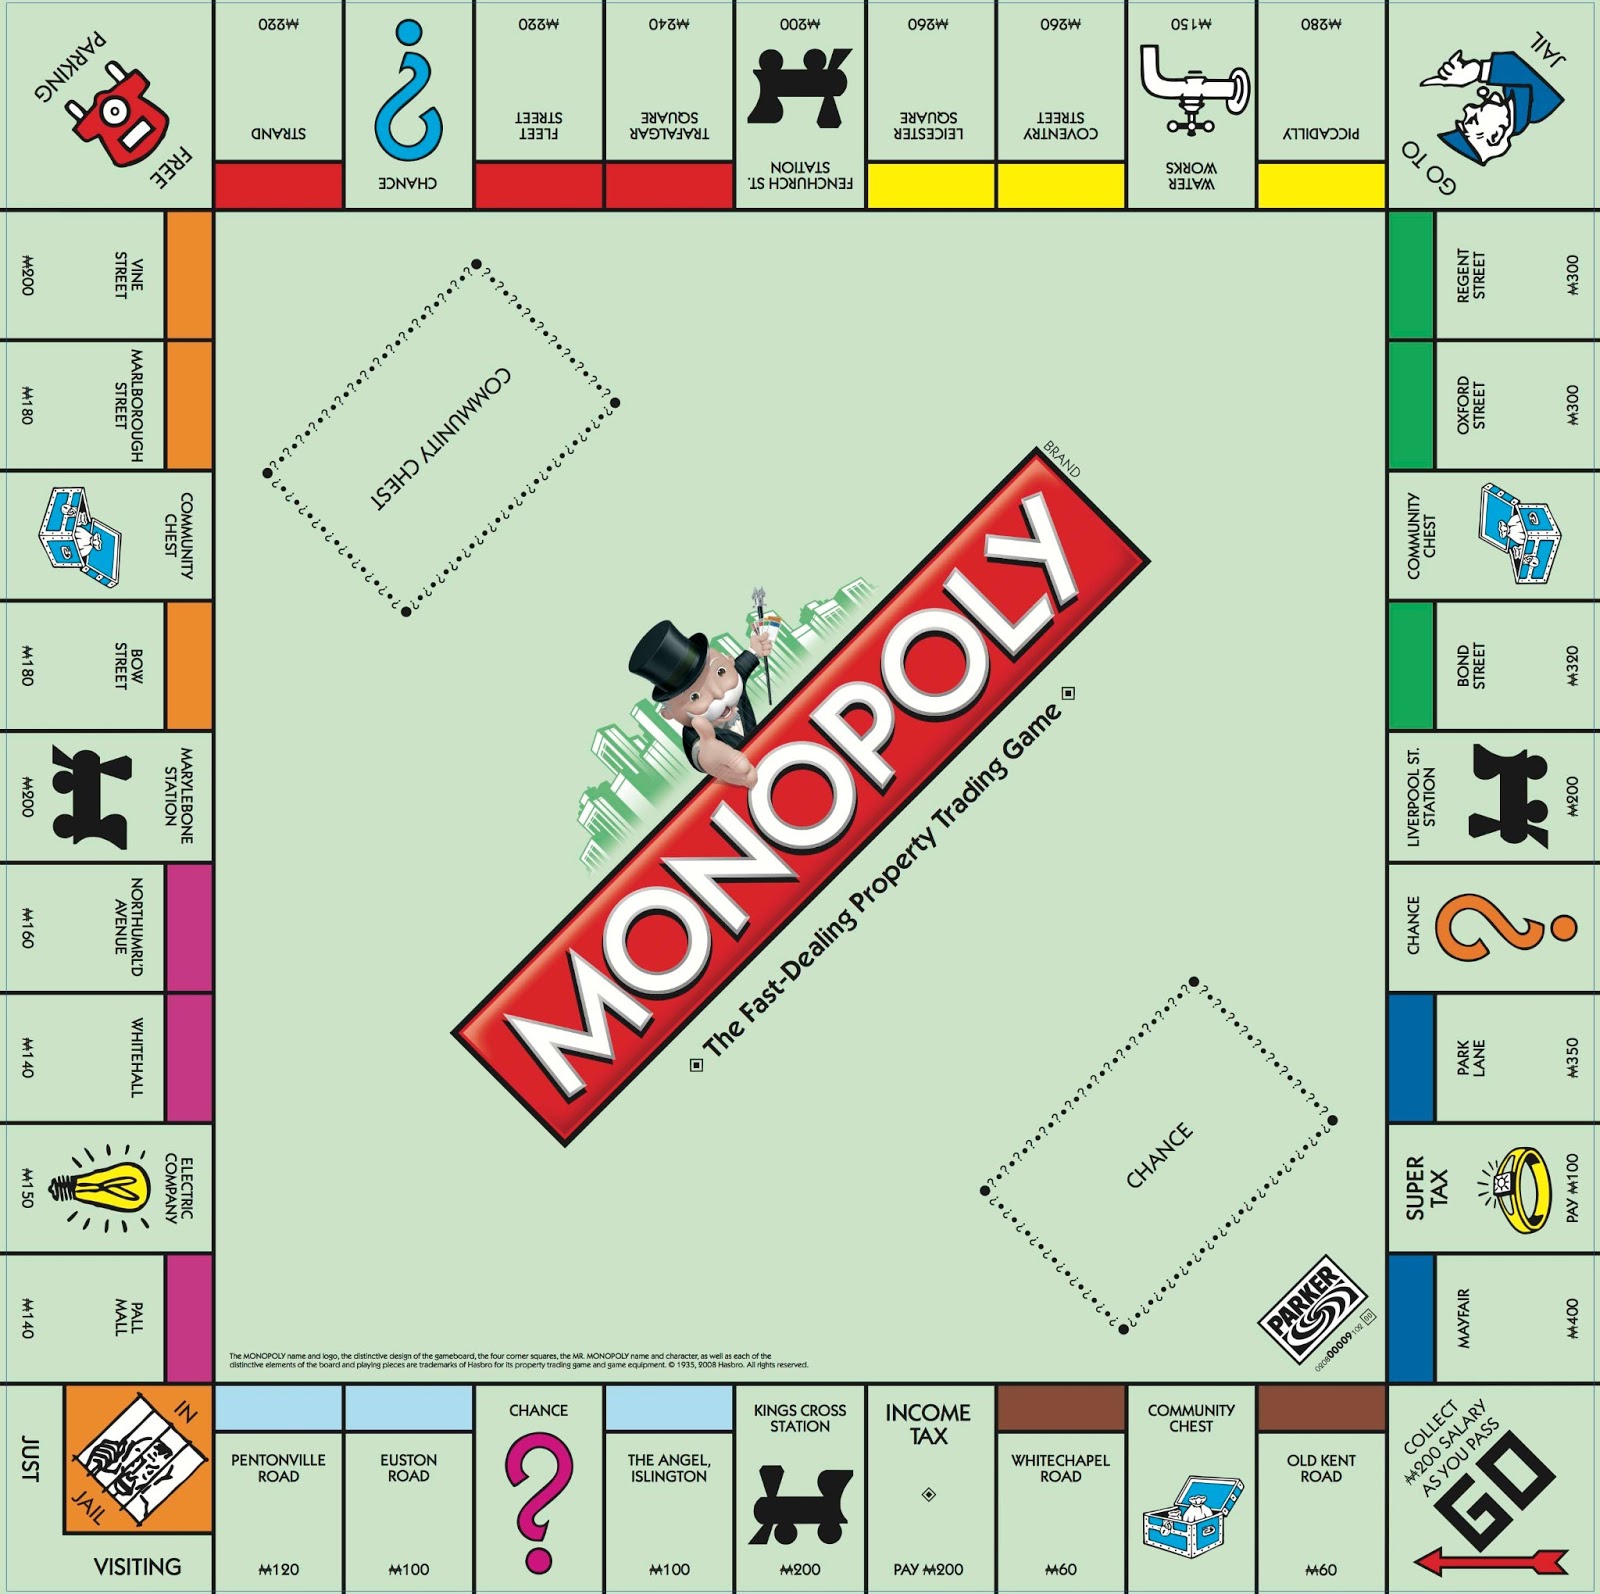 5. In fiecare an se produc mai multi bani de Monopoly decat bani reali